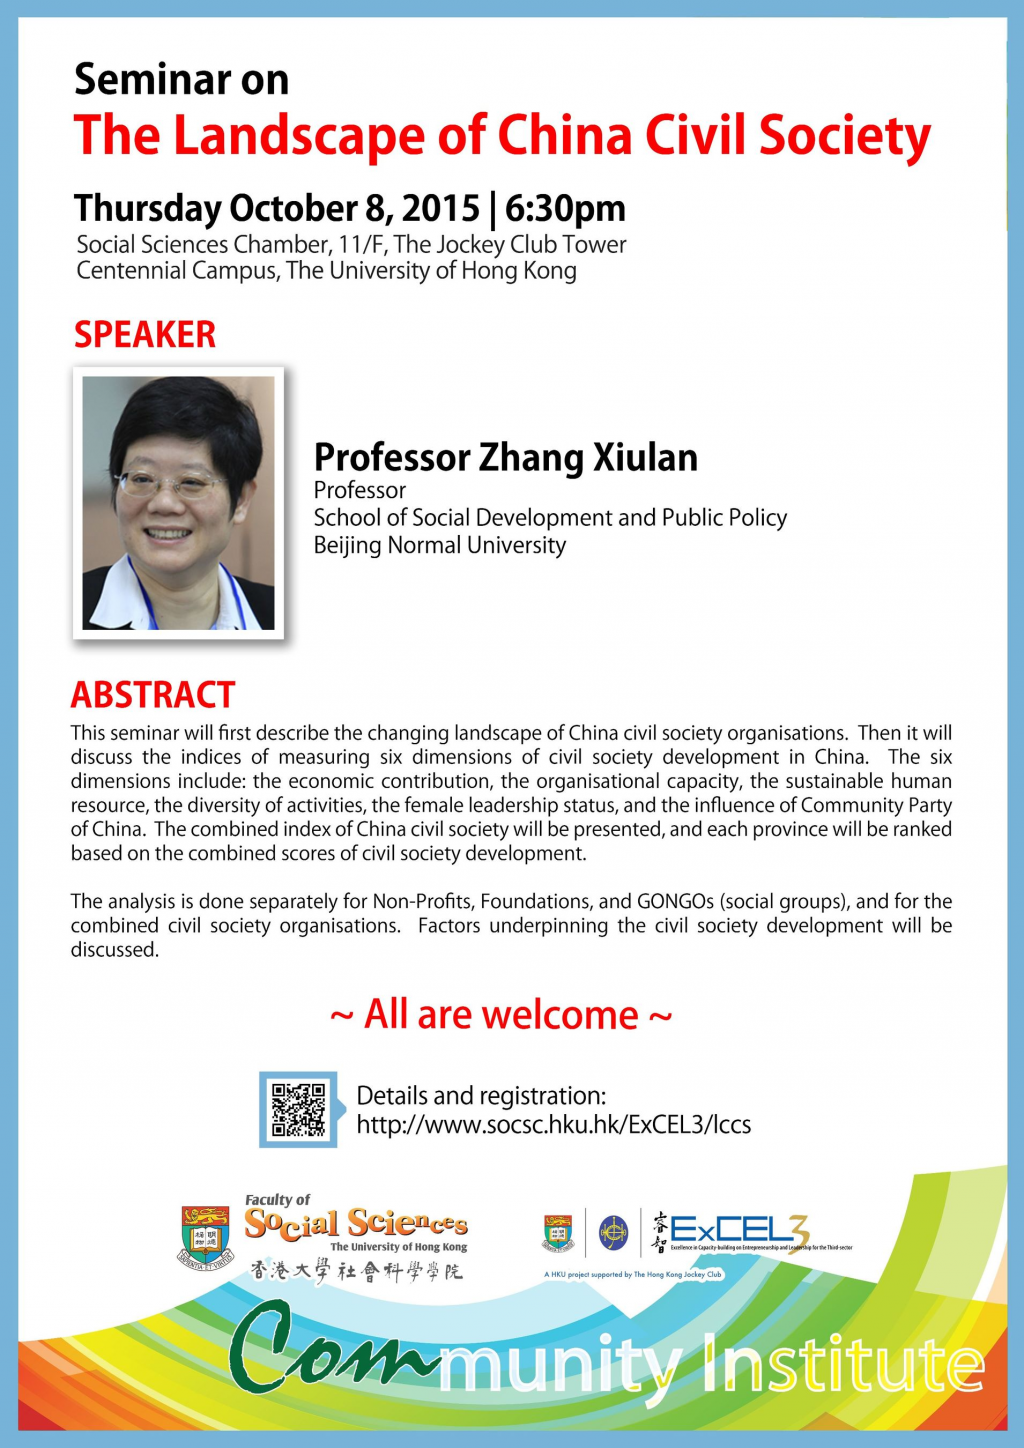 Seminar on The Landscape of China Civil Society